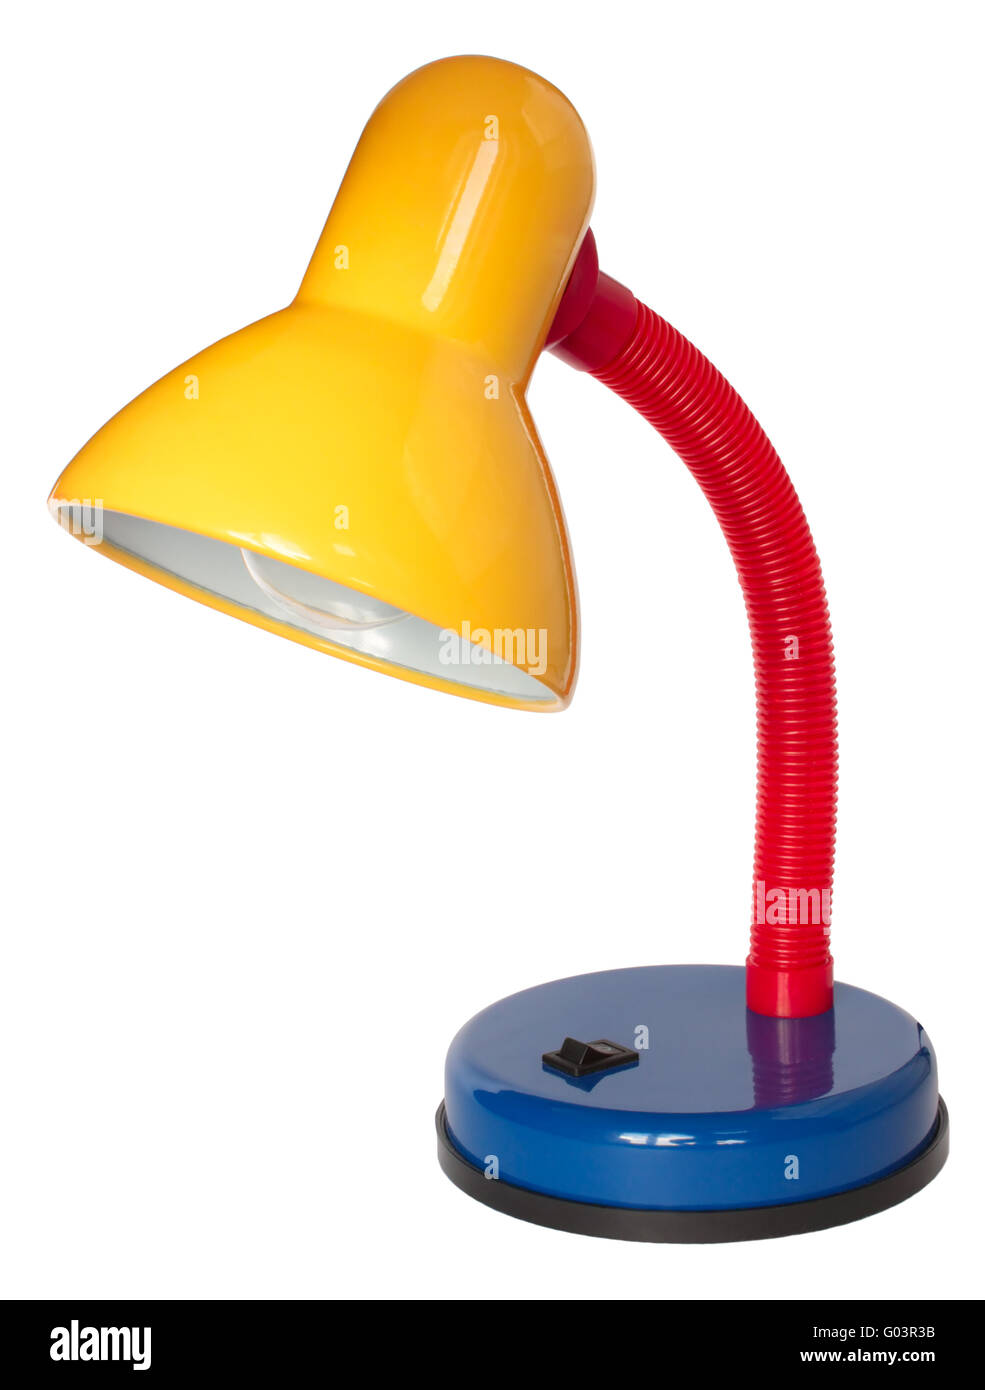 Pixar lamp Imágenes recortadas de stock - Alamy